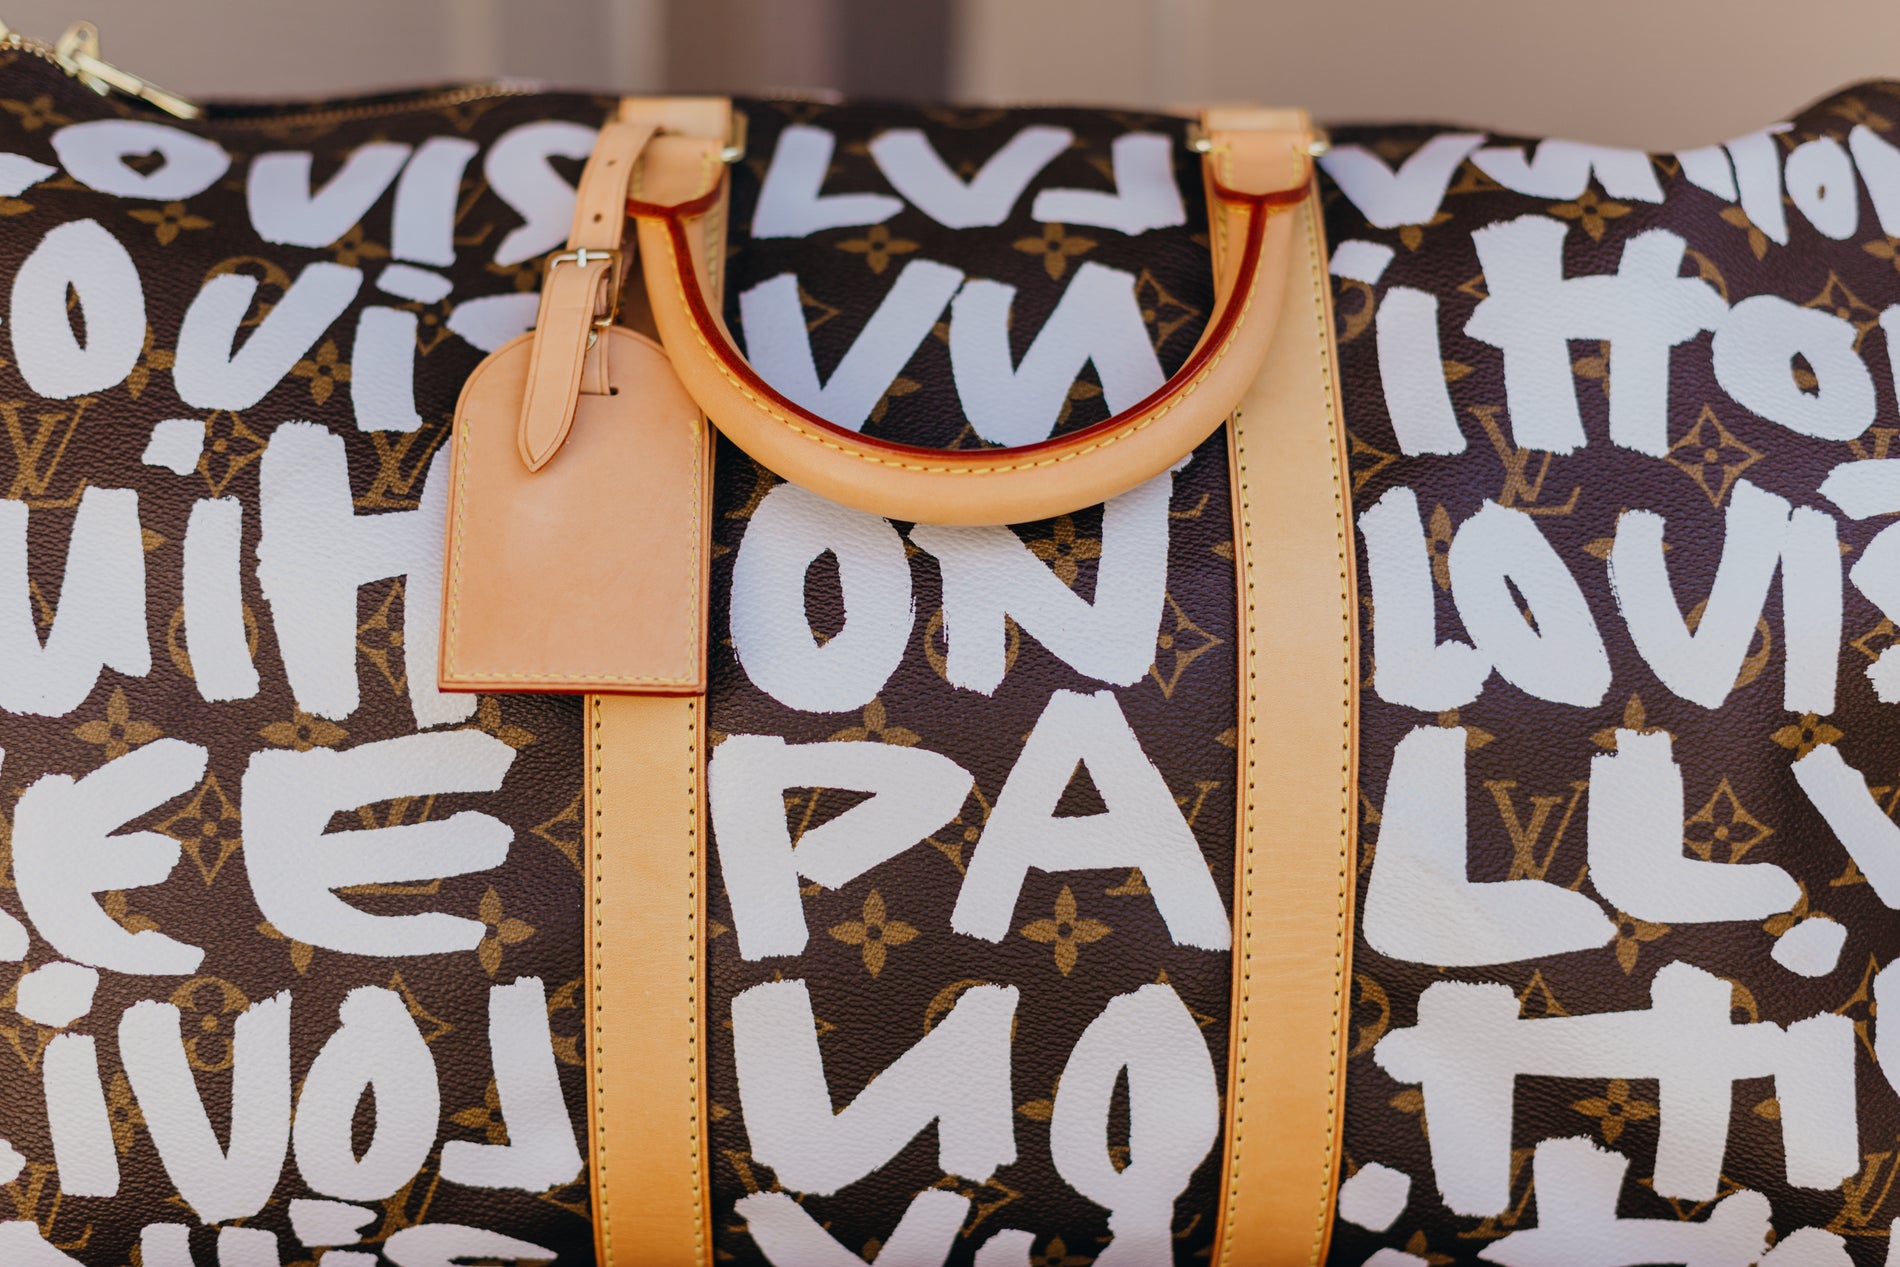 Louis Vuitton Keepall 40 Duffle Bag